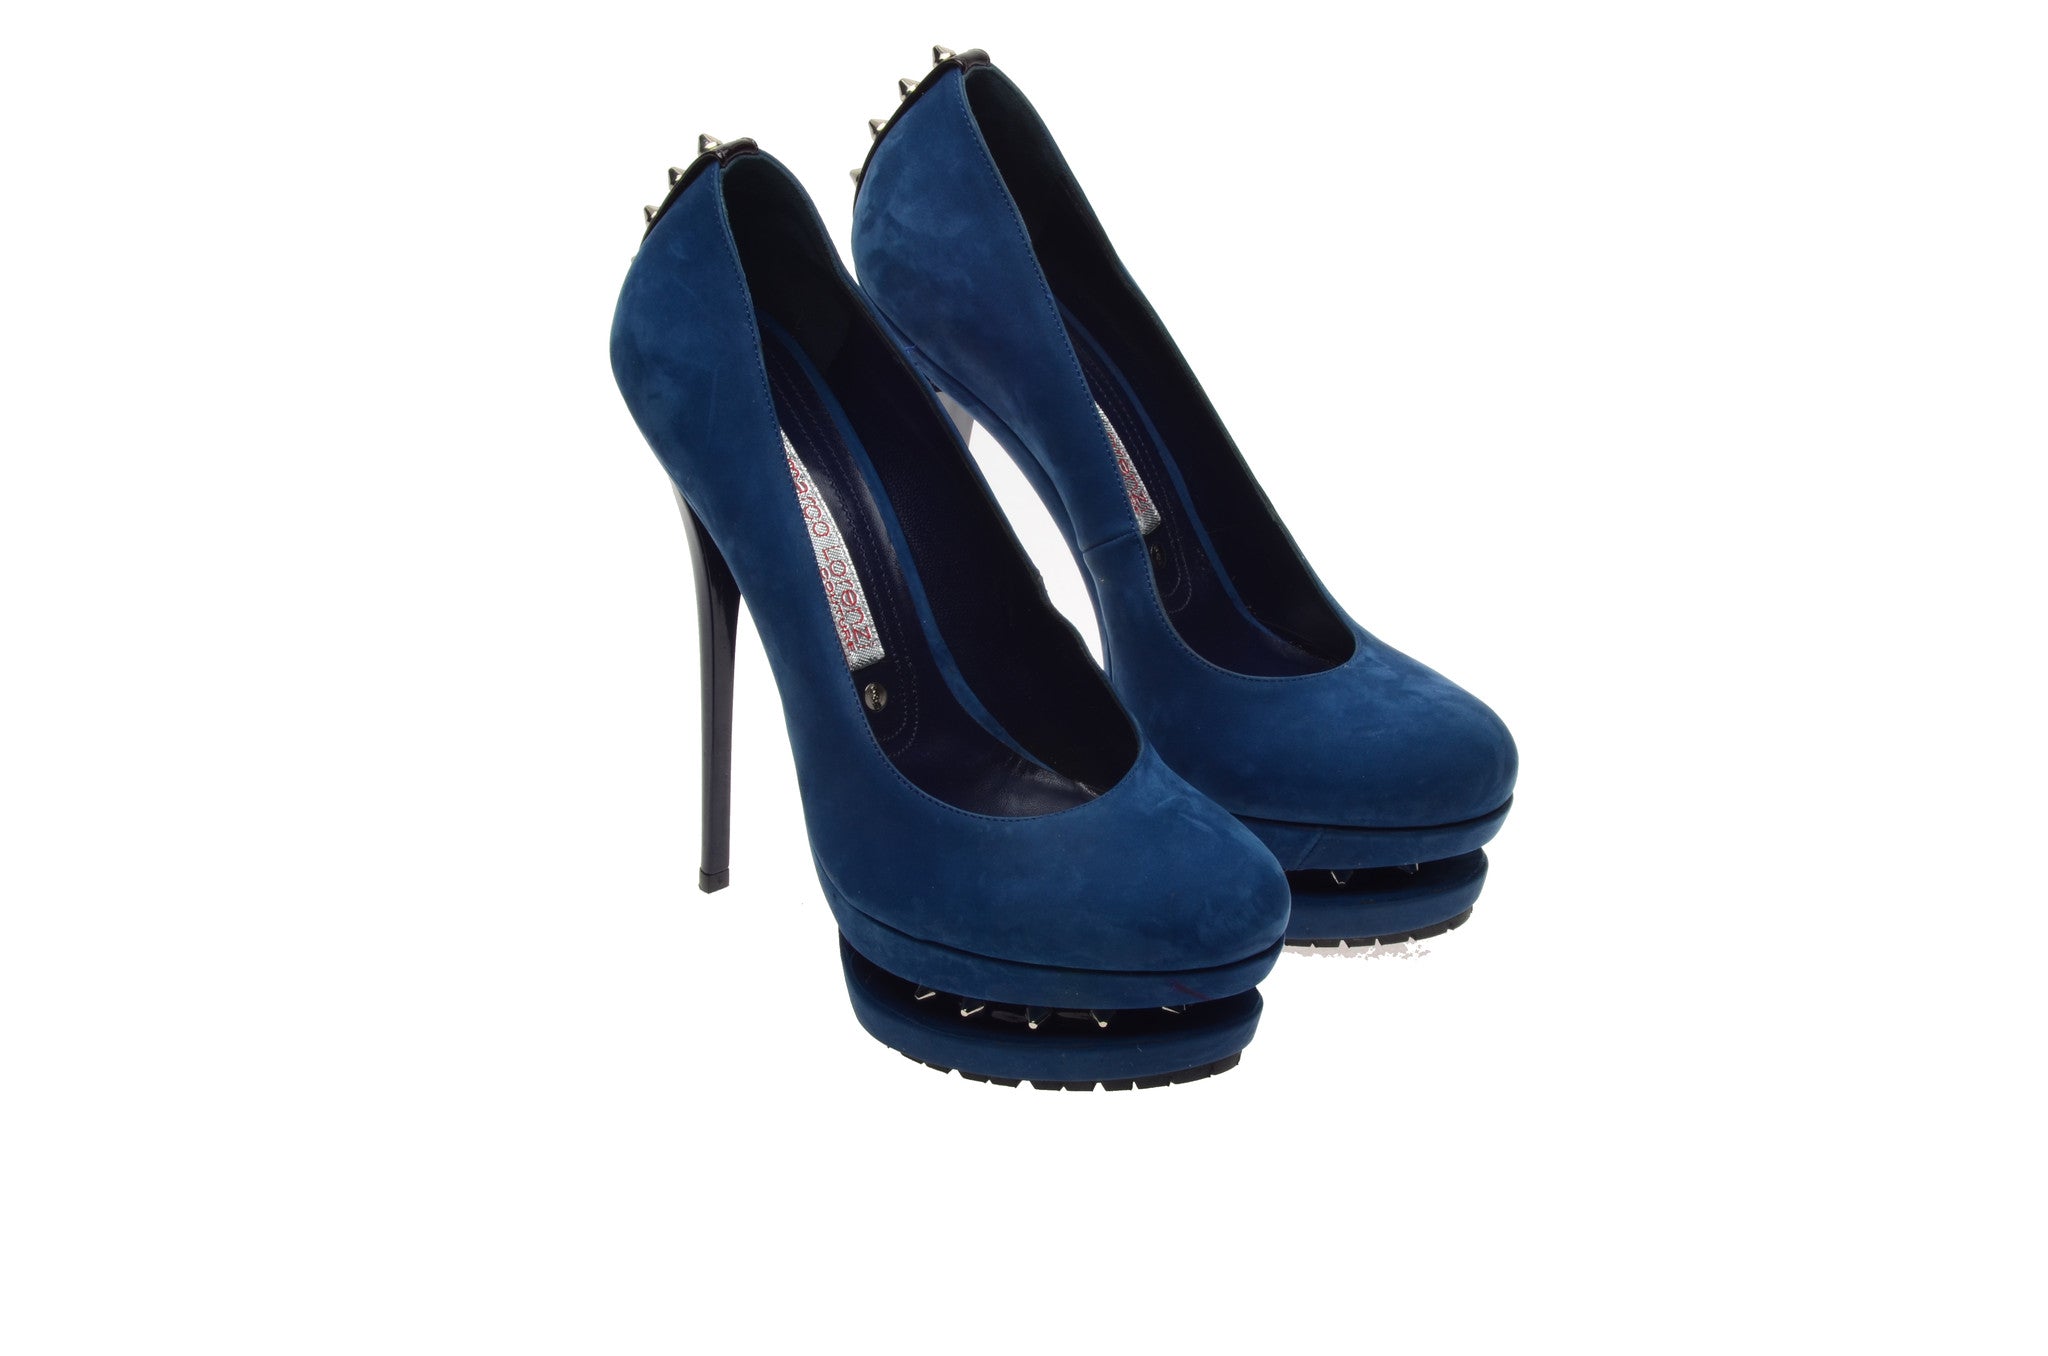 blue suede platform heels